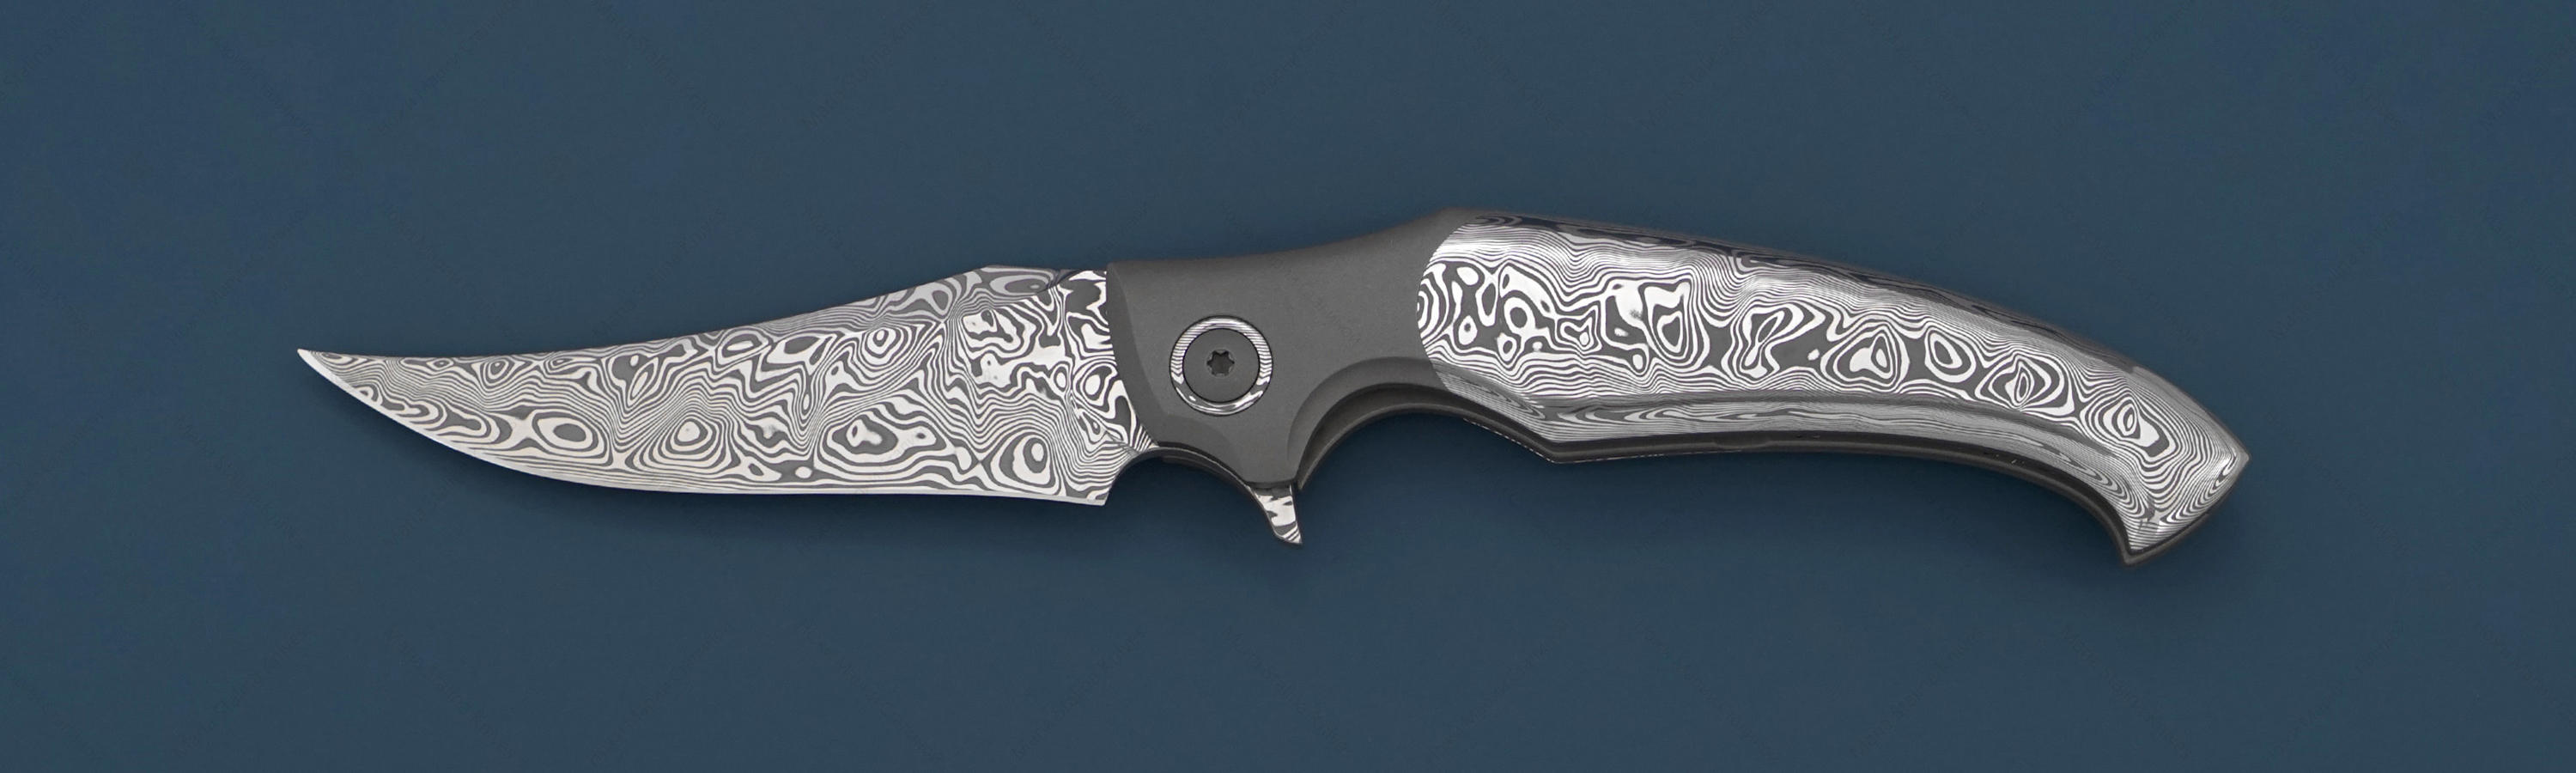 Lerman Custom Knives Hydra